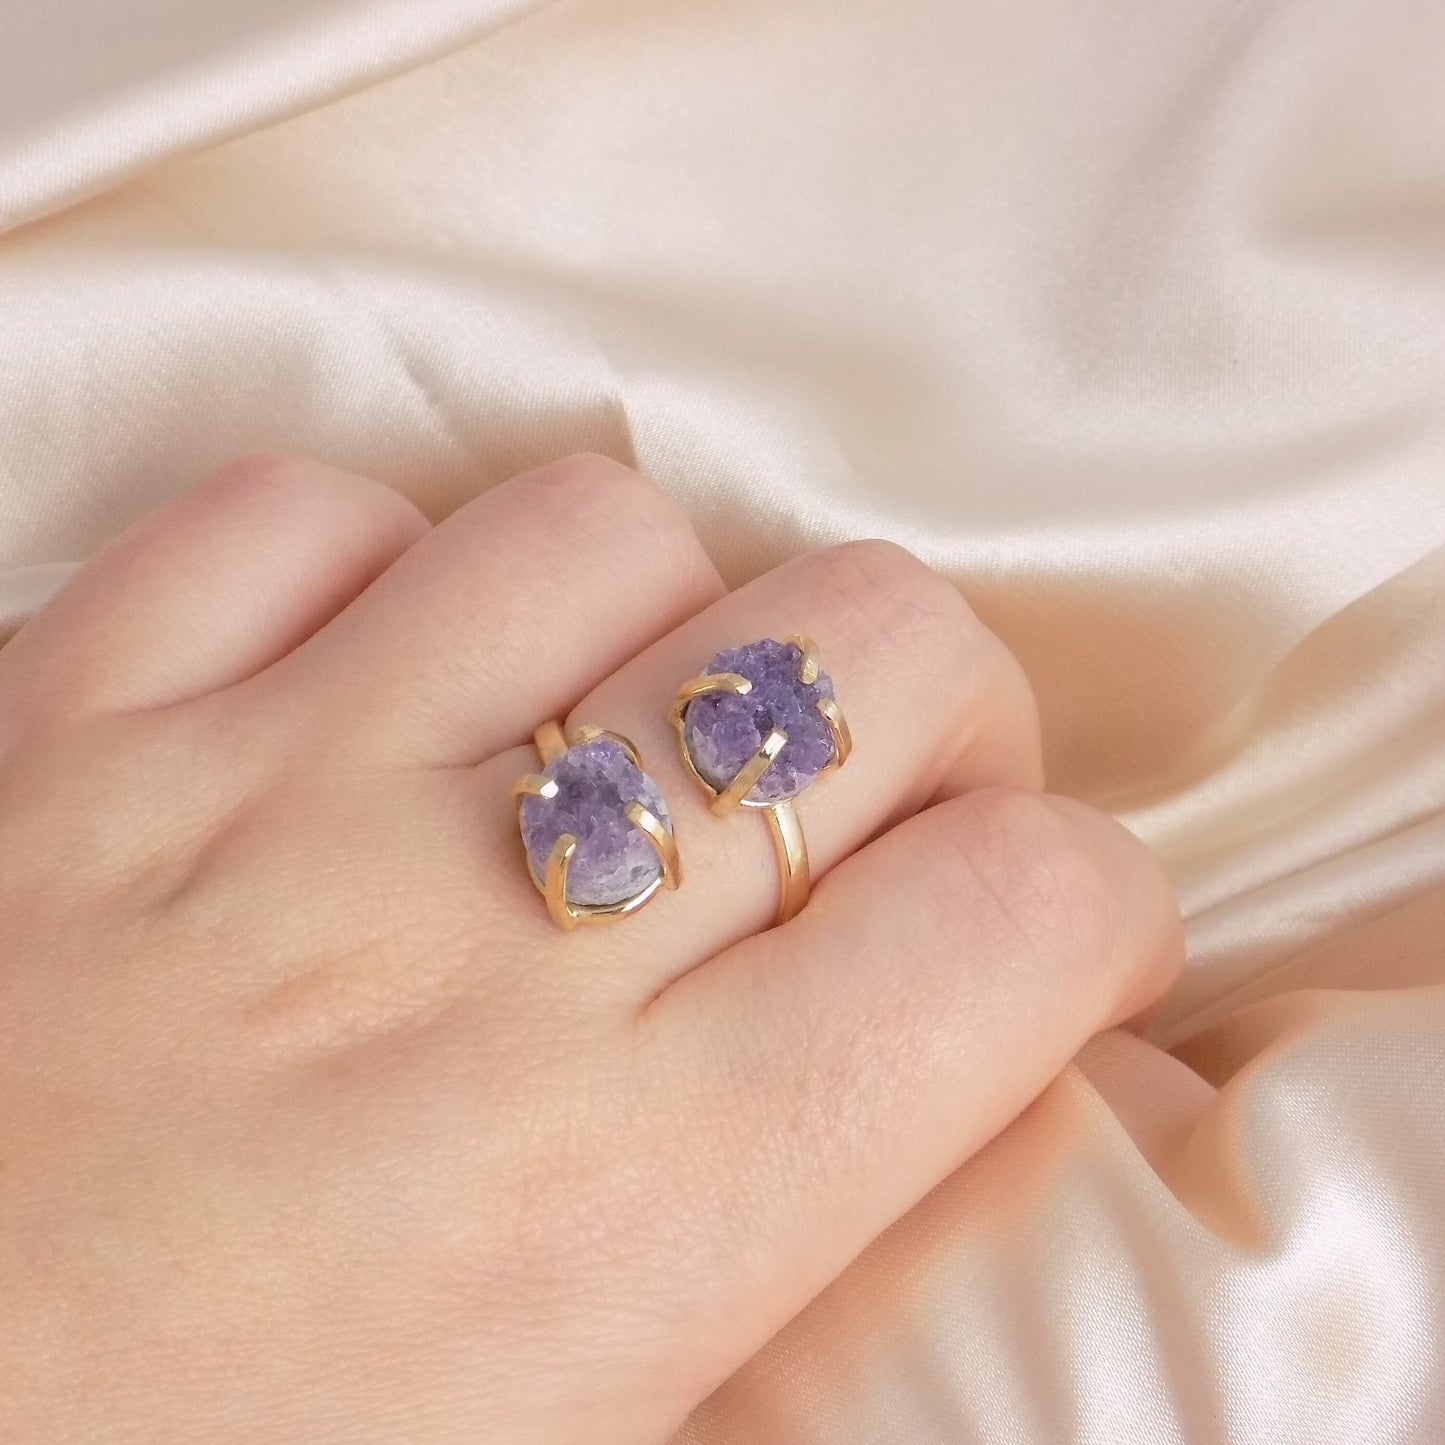 Raw Amethyst Gemstone Ring Adjustable Gold Plated, Two Purple Stones Rings, Minimalist Statement, G15-214